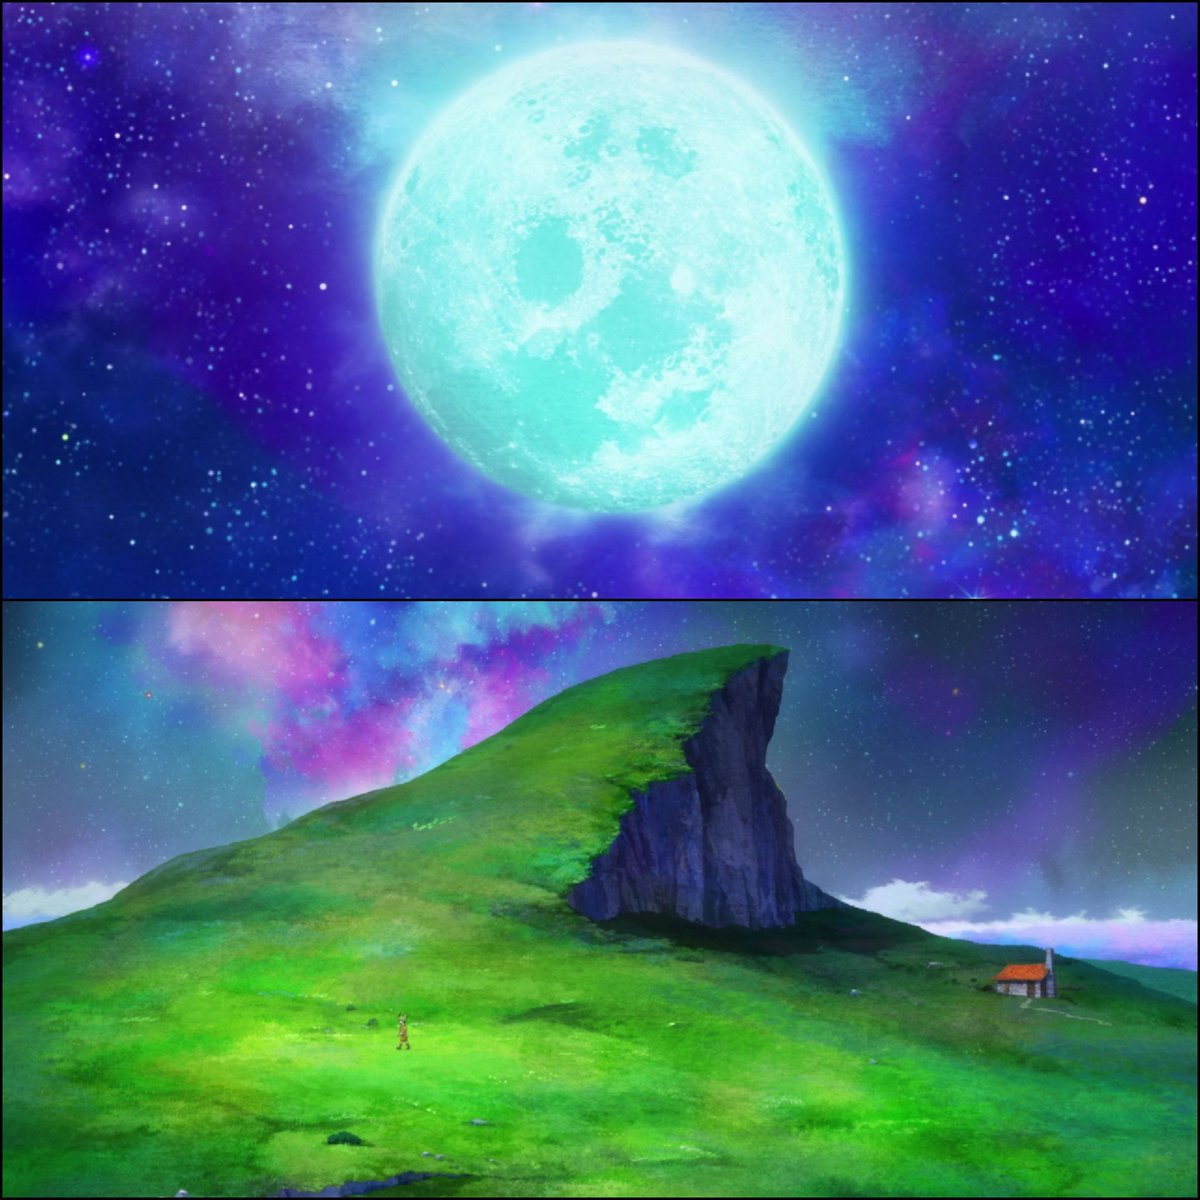 Moonlight on the Finger of God mountains🌙 Anime 📺: Four Knights Of The Apocalypse Episode 1 #NanatsuNoTaizai #SevenDeadlySins #MokushirokunoYonkishi #FourKnightsoftheApocalypse #黙示録の四騎士